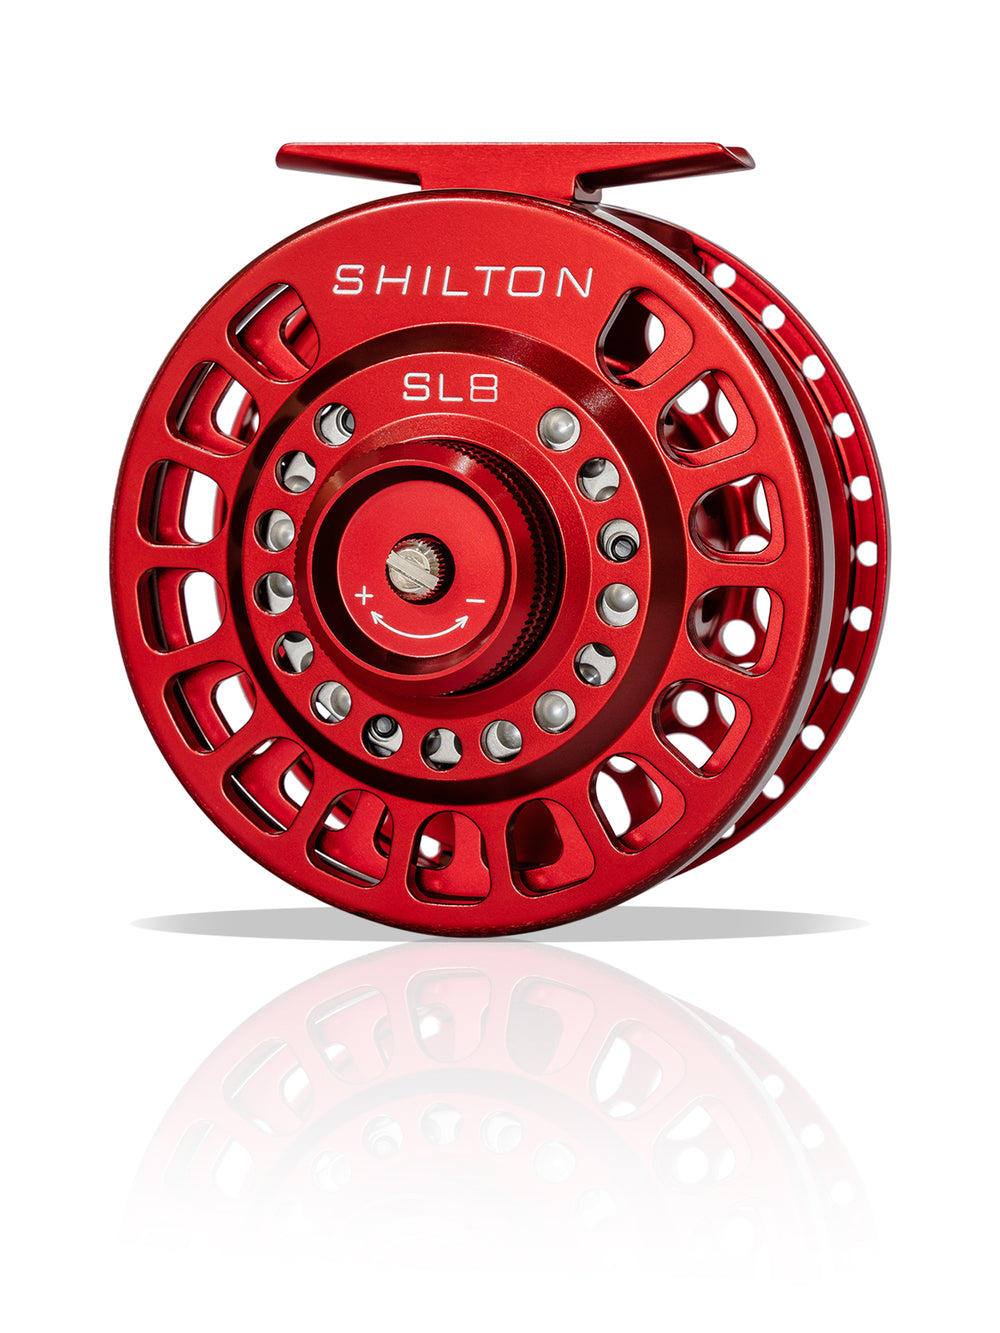 Shilton SL5 Reel (7-8wt) SL8 in Red